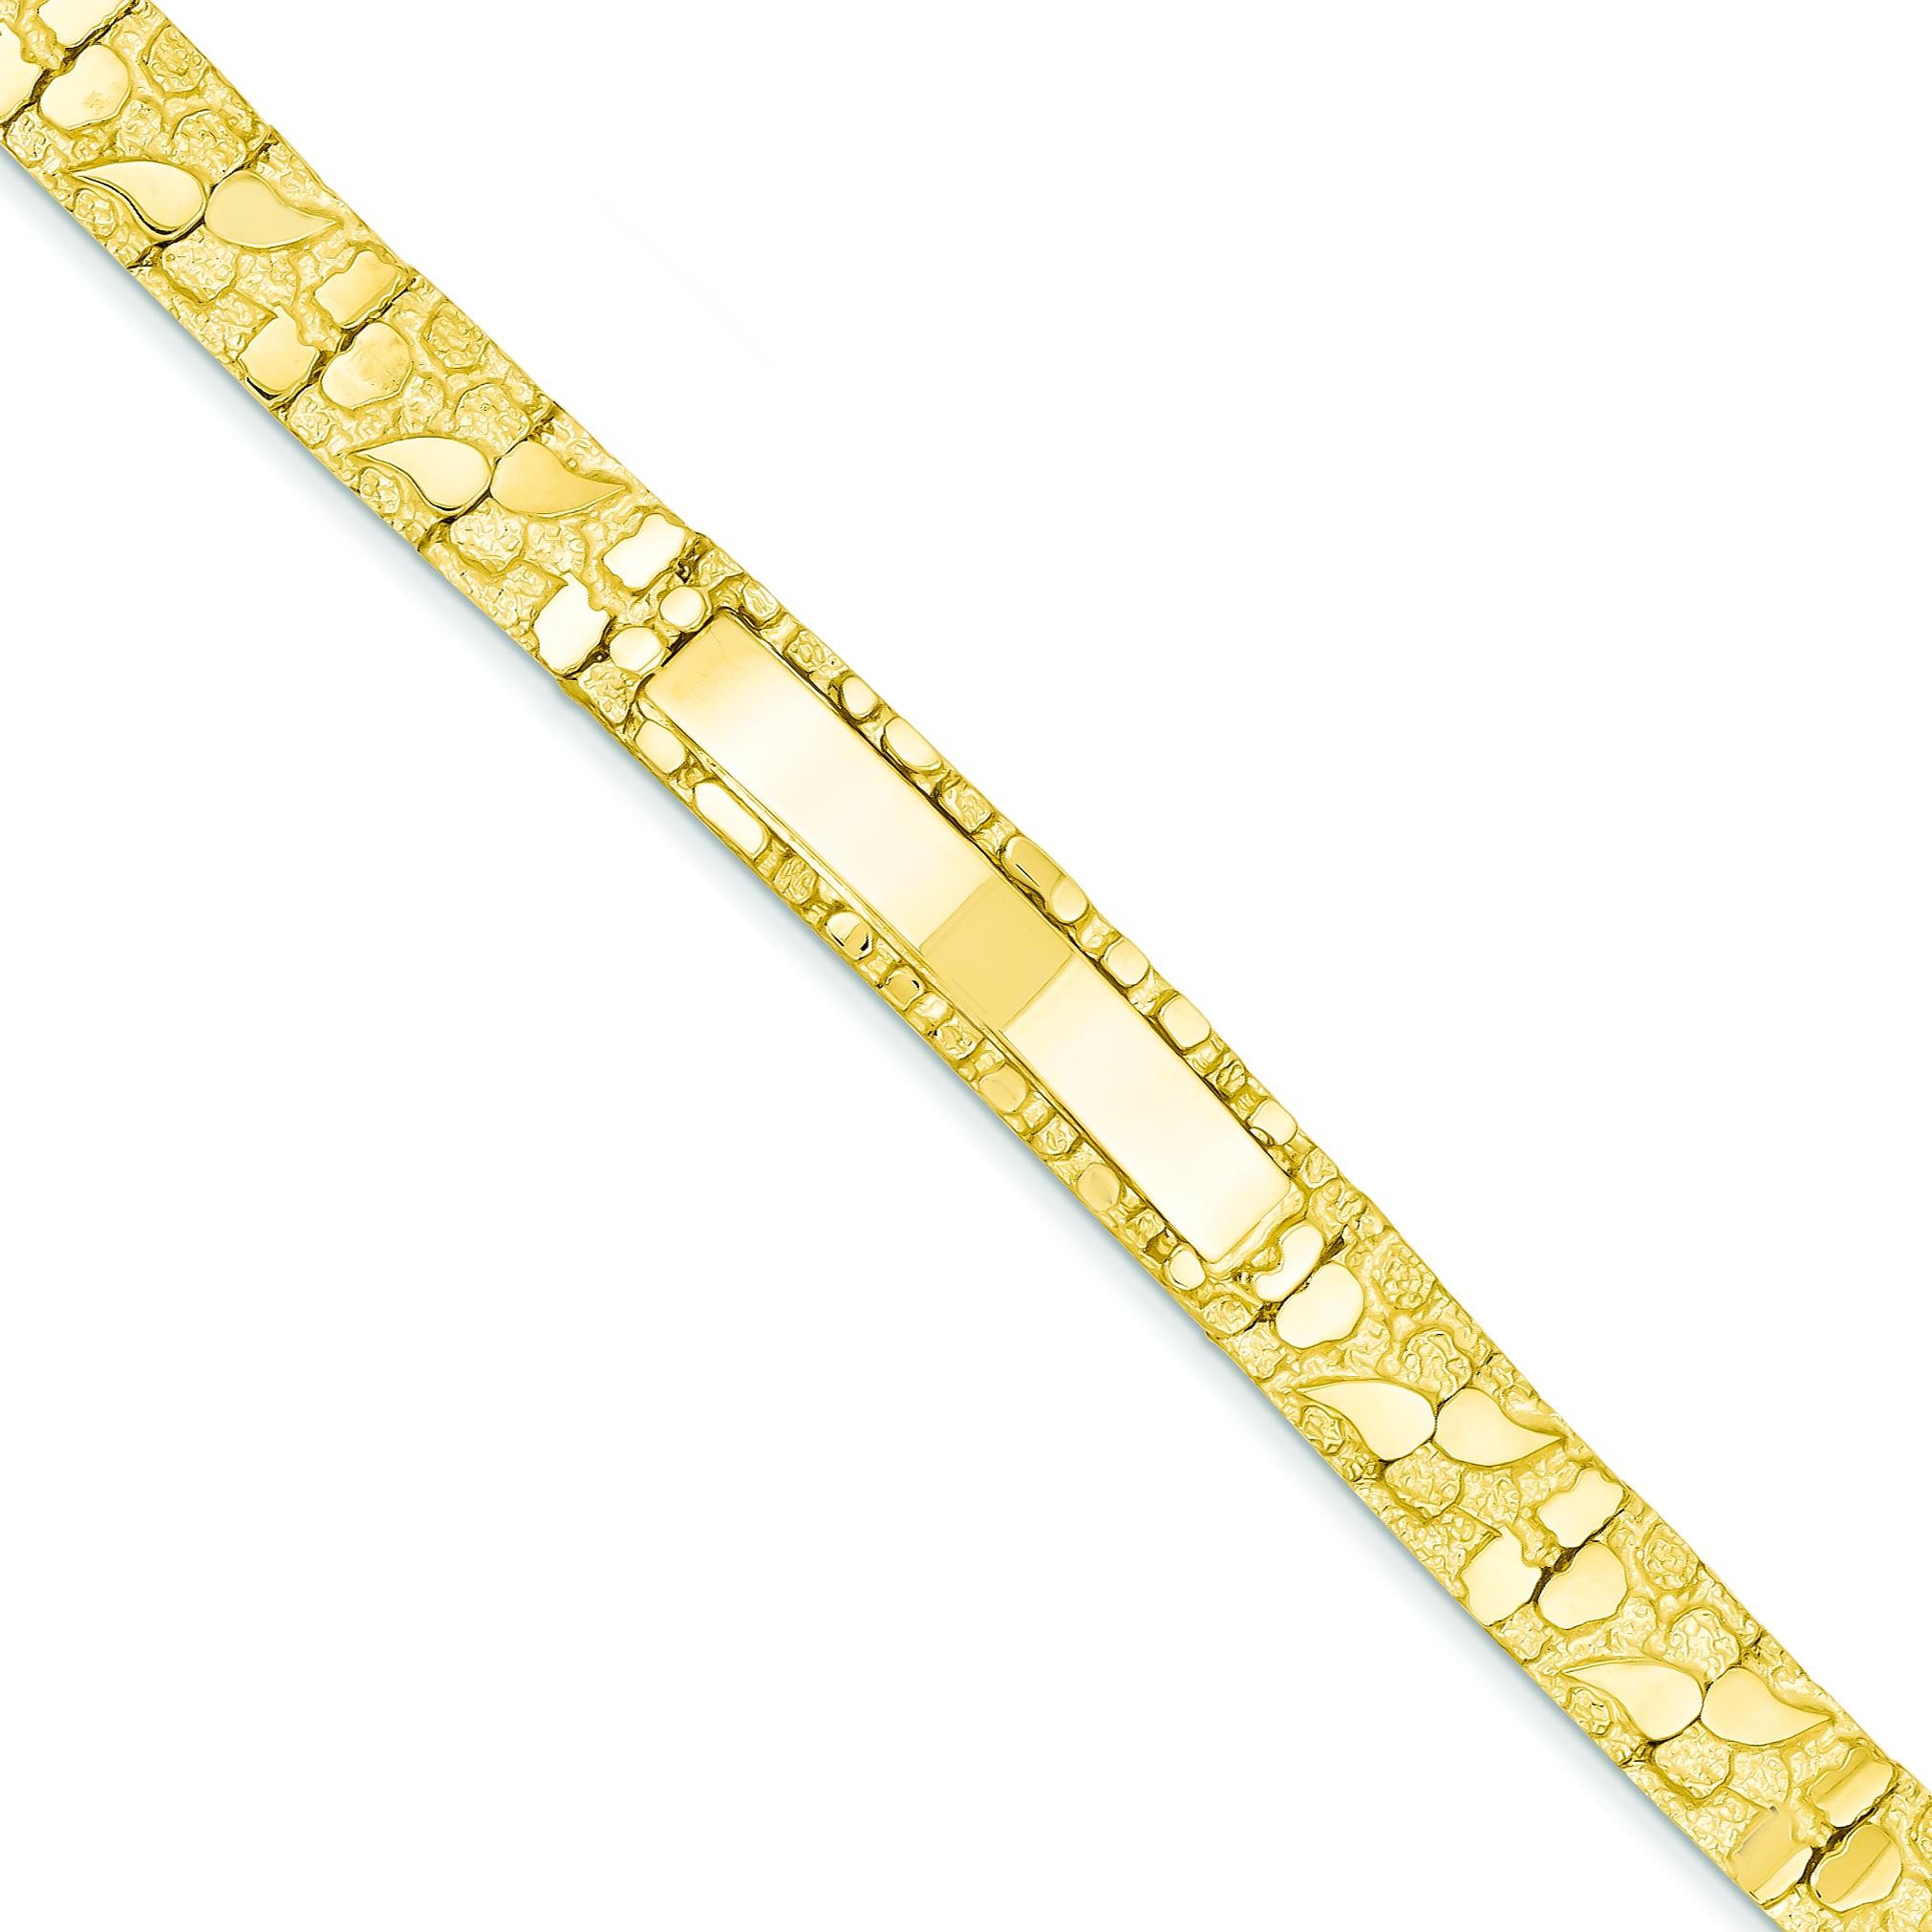 Mm Nugget ID Bracelet in 14k Yellow Gold